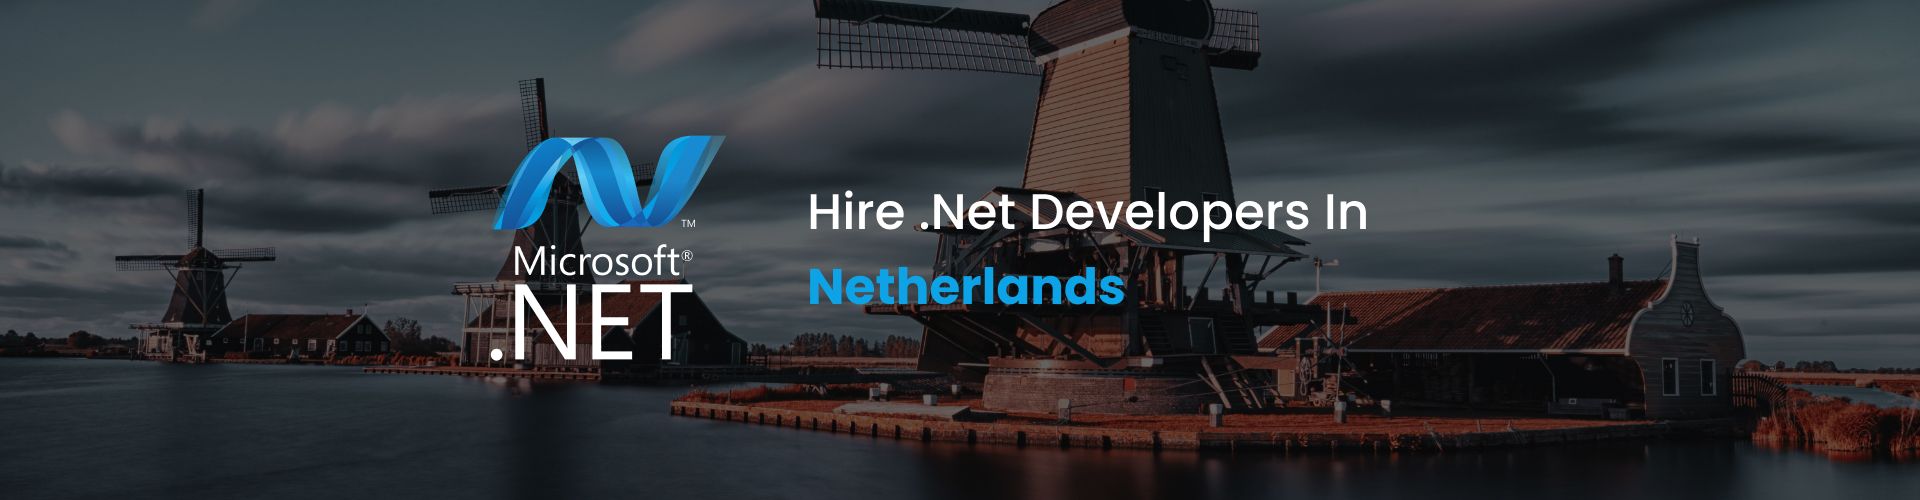 hire .net developers in netherlands